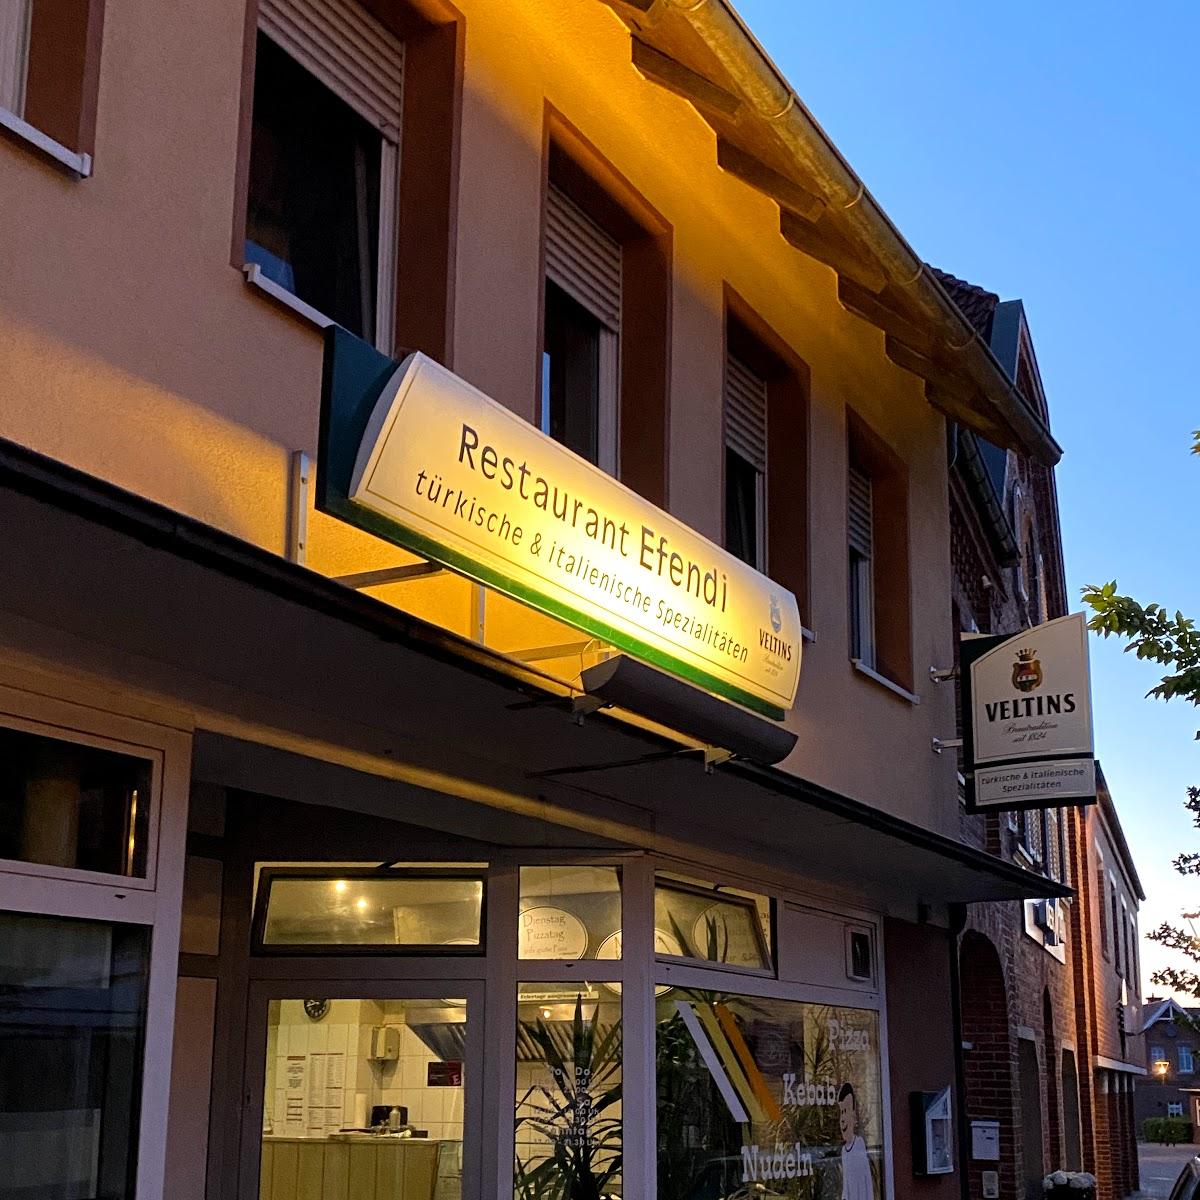 Restaurant "Grillrestaurant Efendi" in  Lengerich